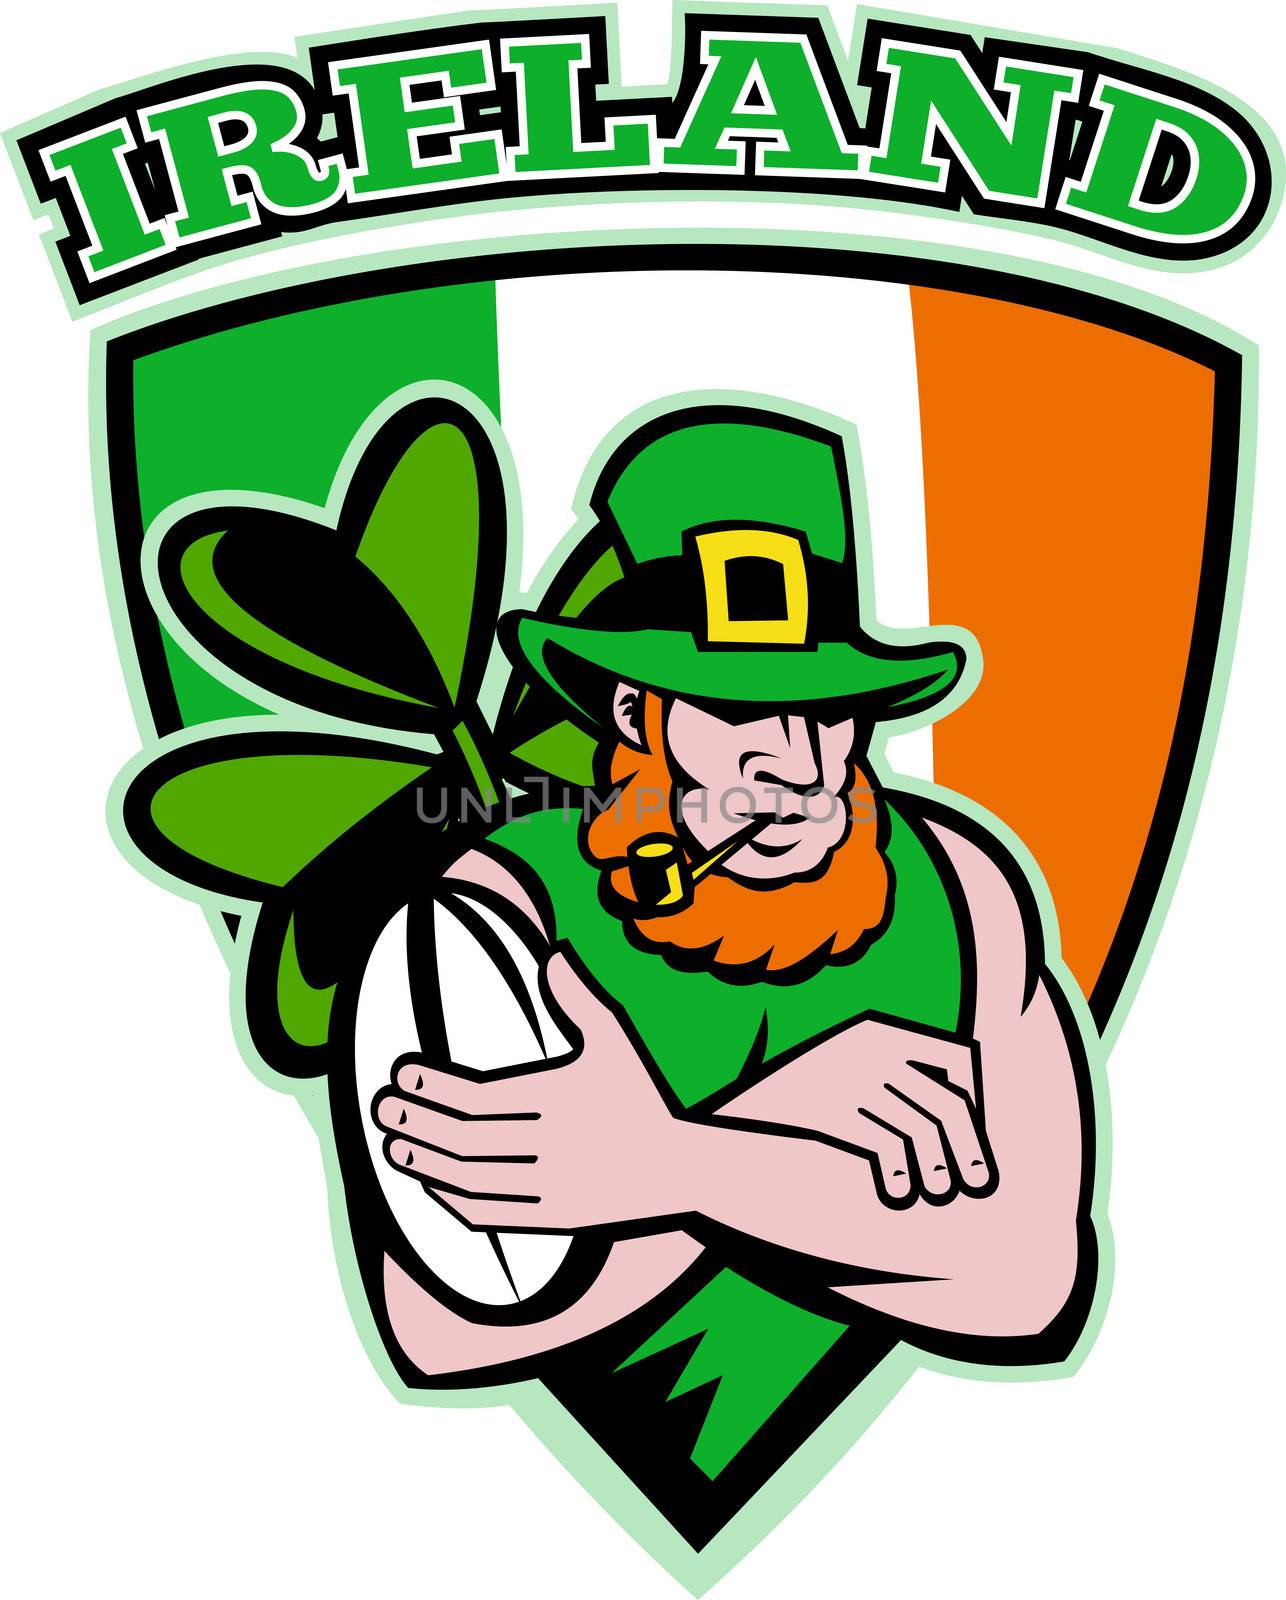 Irish leprechaun rugby player shield Ireland by patrimonio